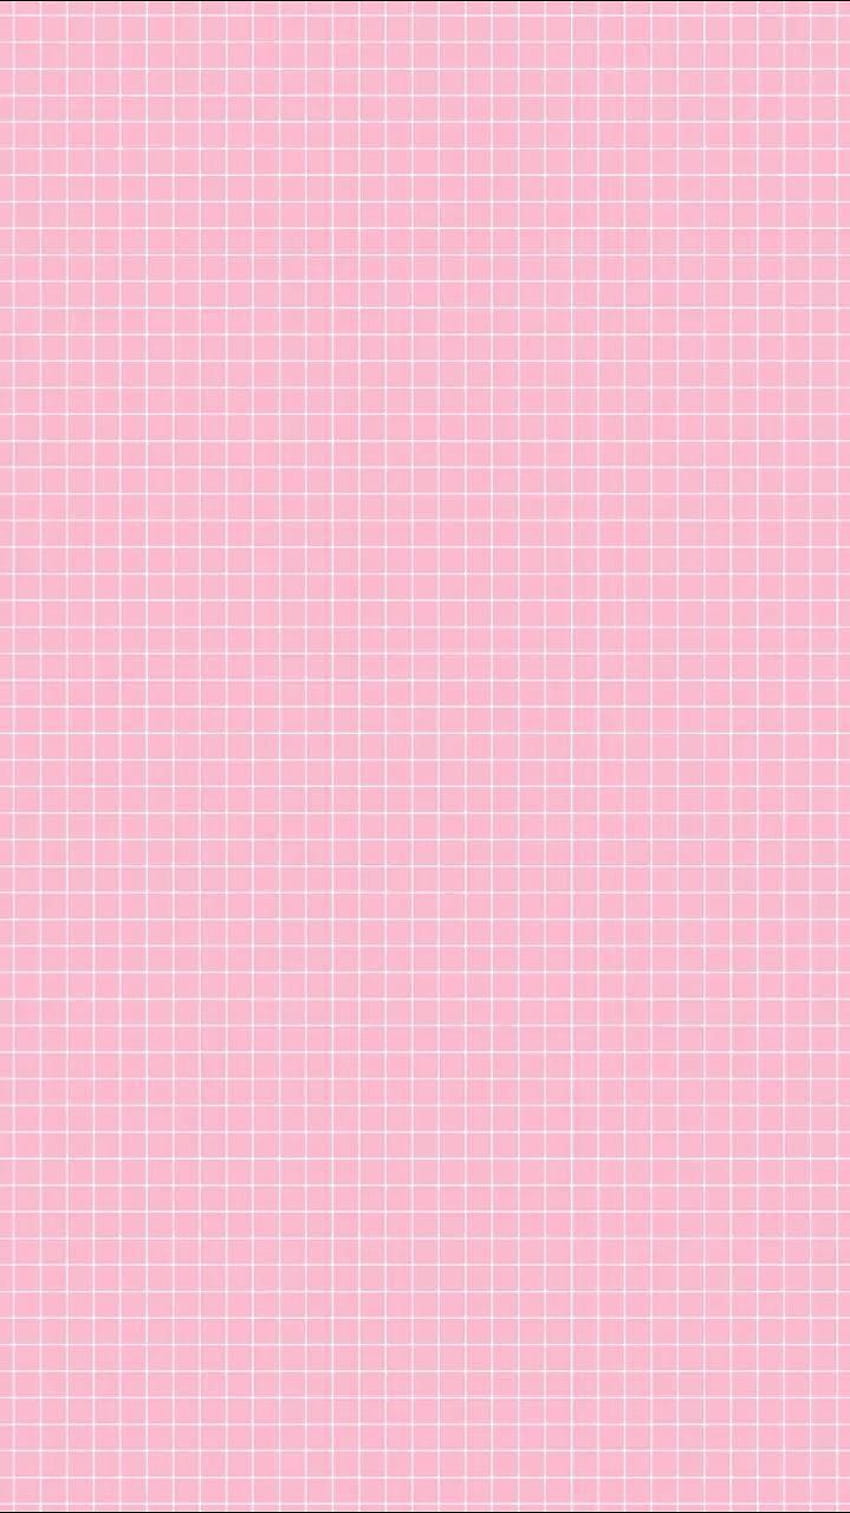 Summer Pink Grid Background Wallpaper Image For Free Download  Pngtree